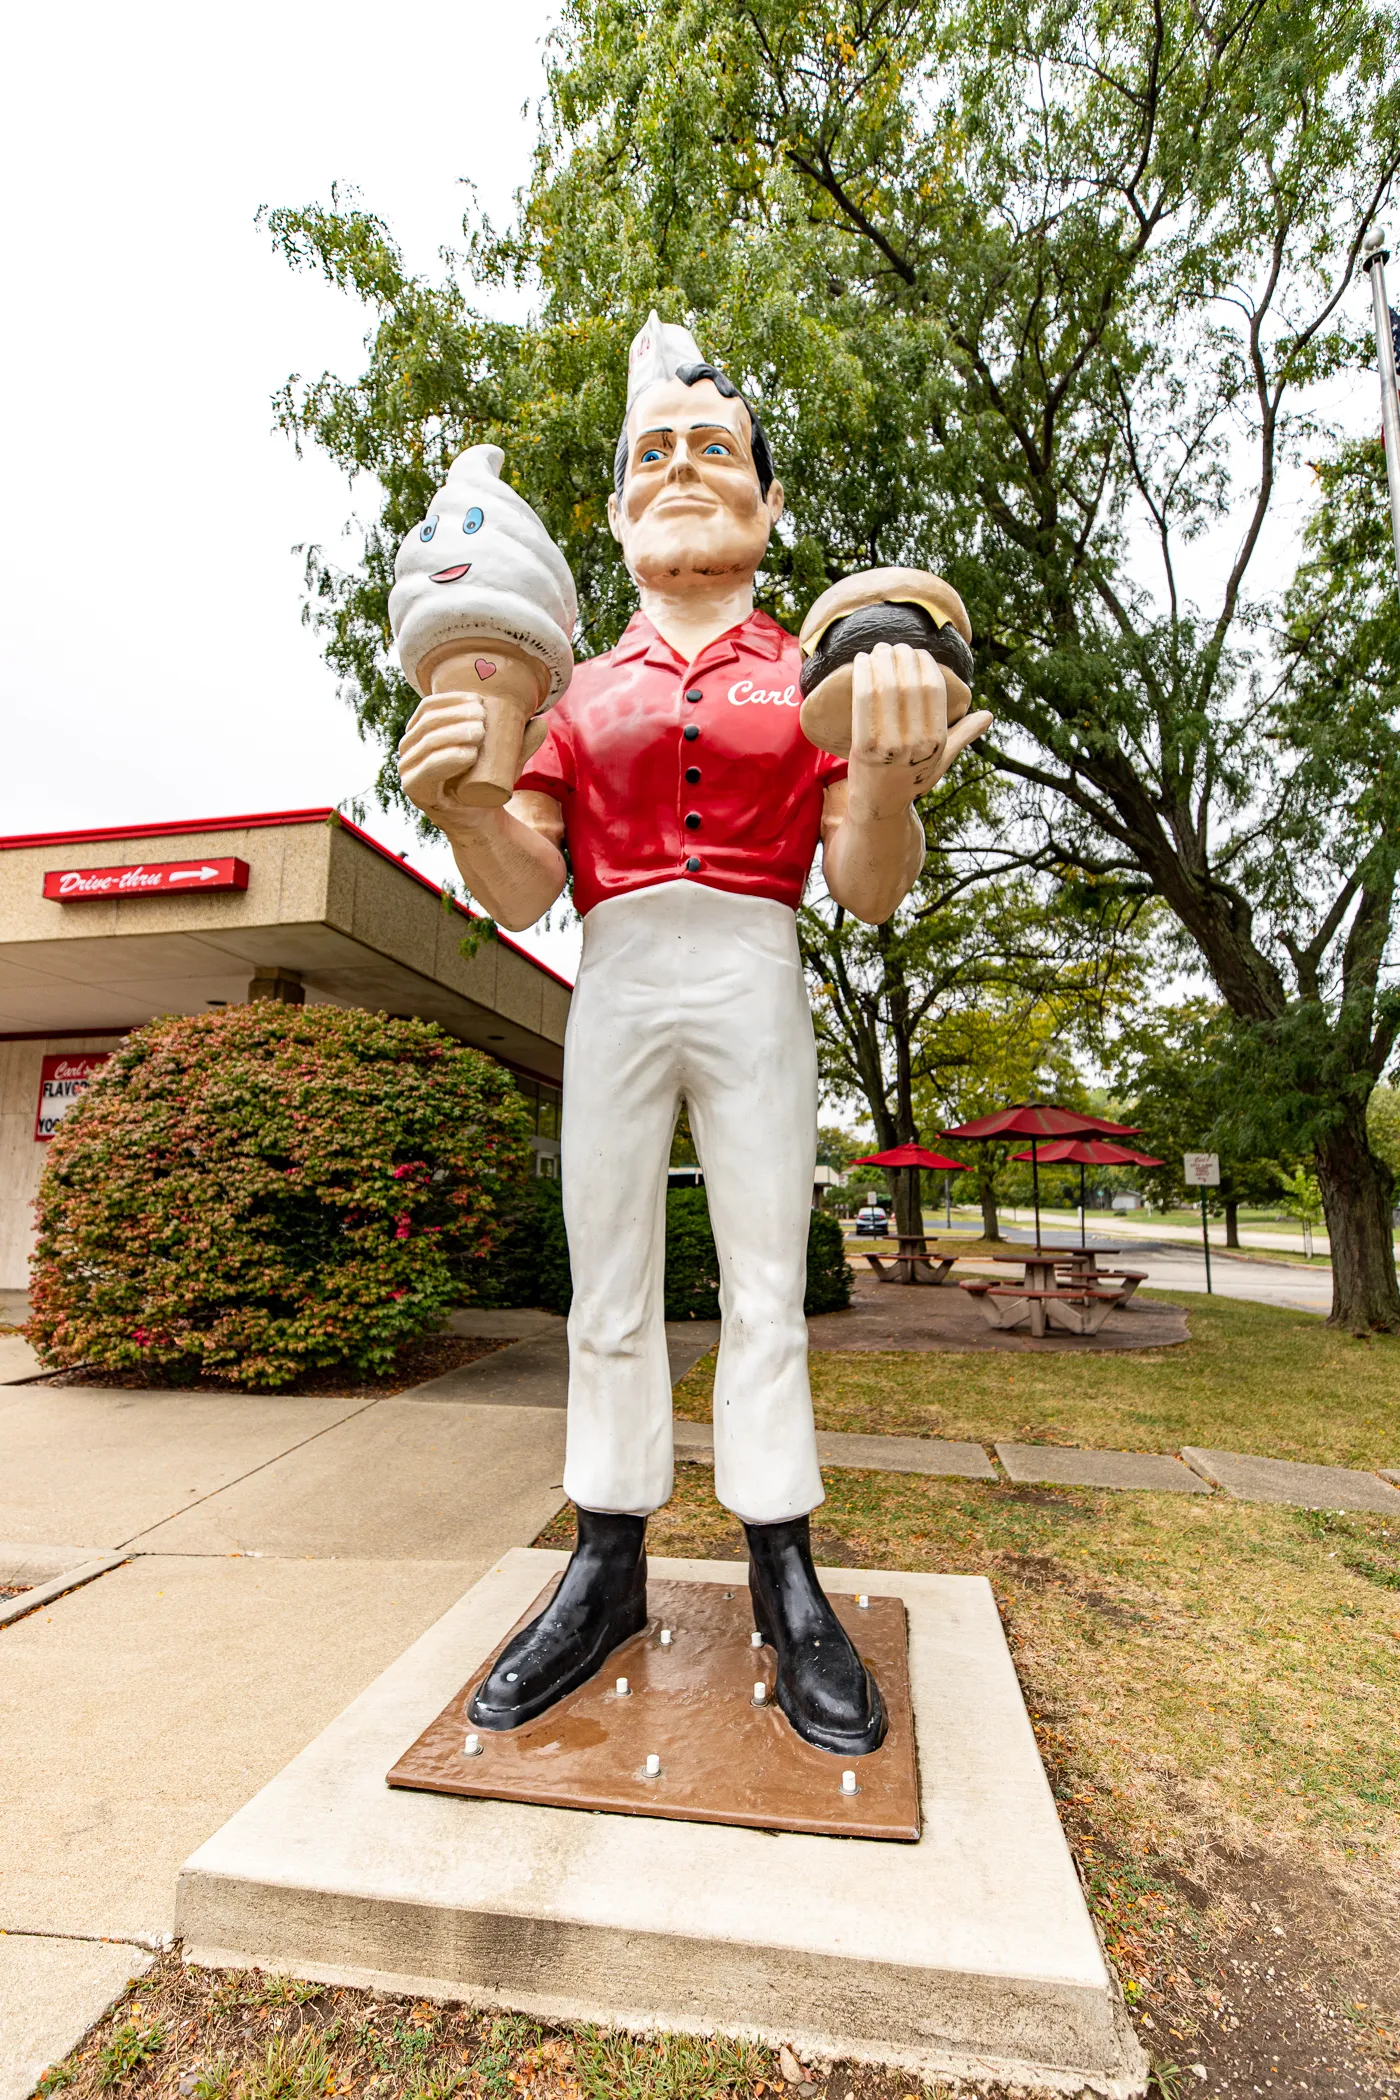 Carl's Ice Cream Muffler Man in Normal, Illinois Route 66 Roadside Attraction